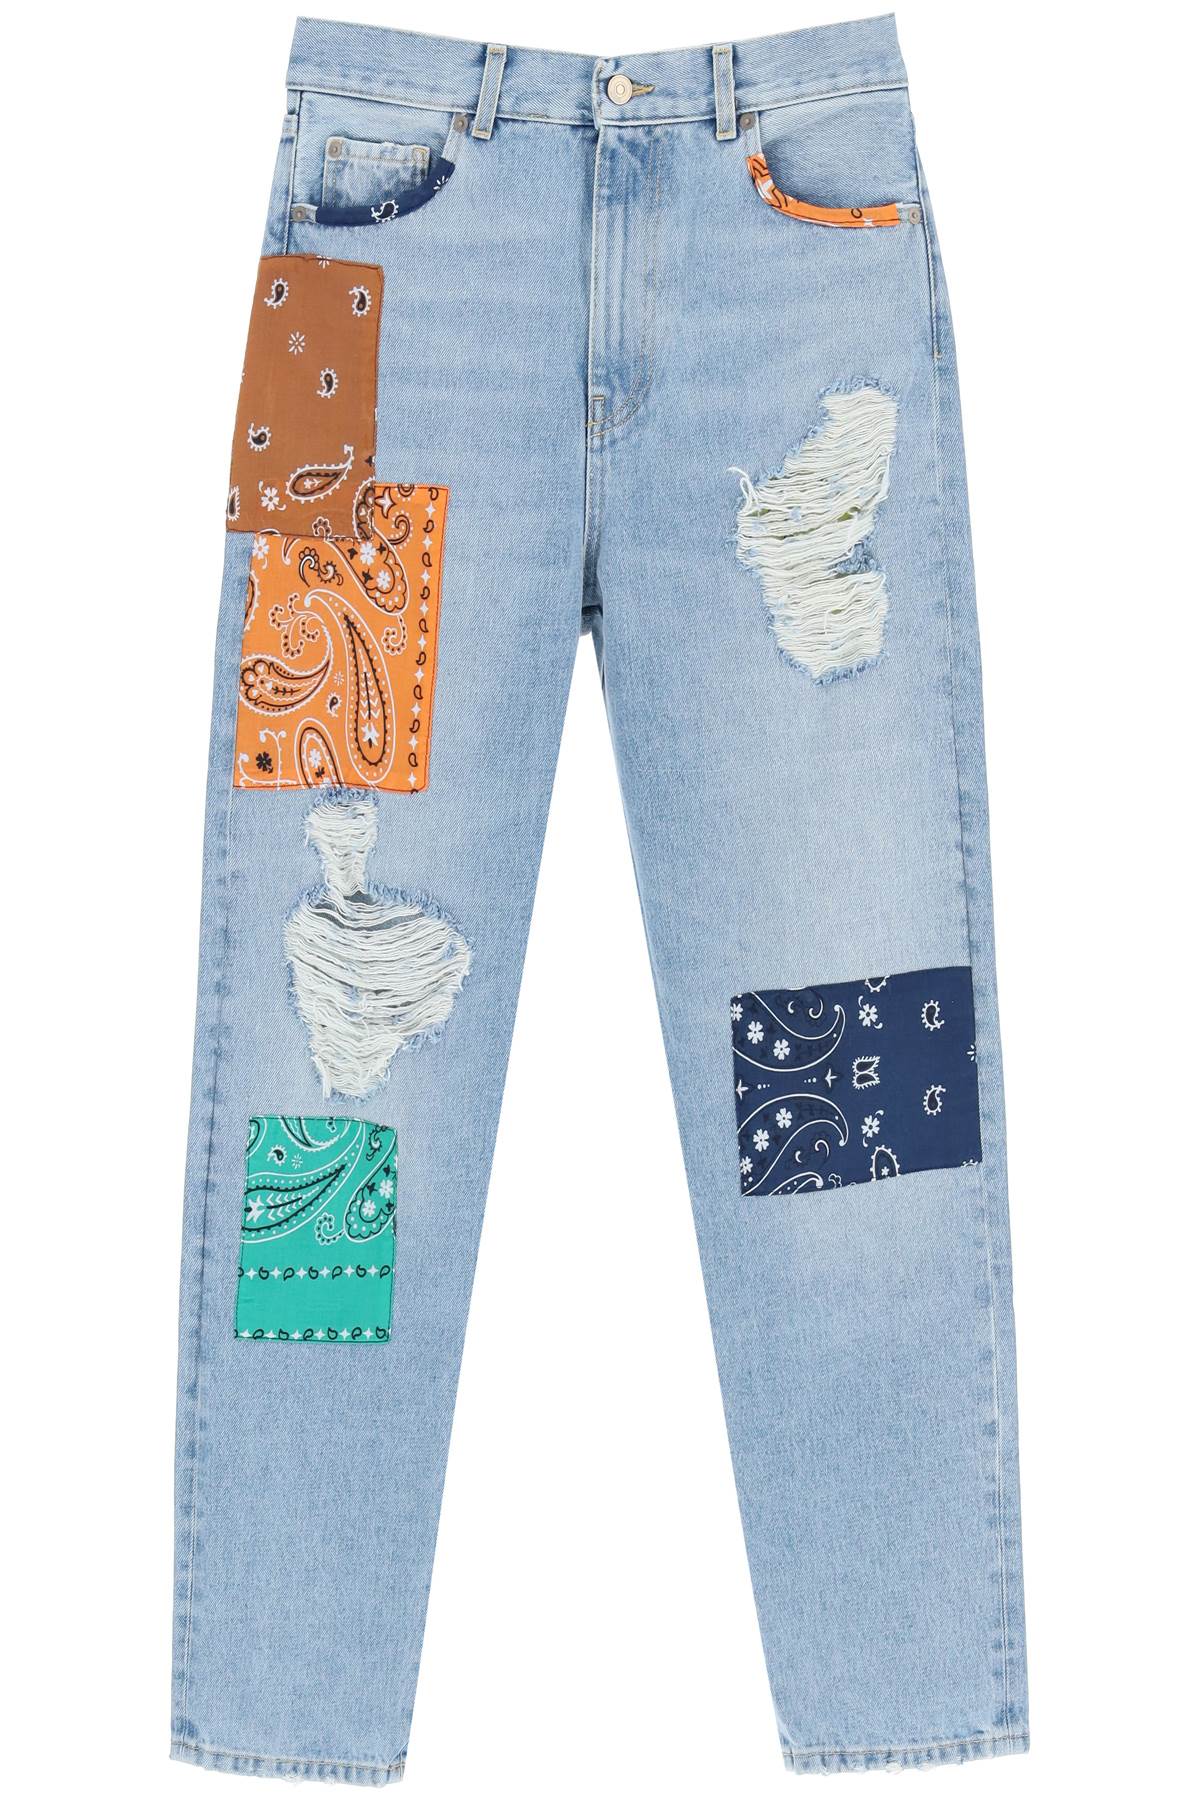 Alanui california Patchwork Jeans